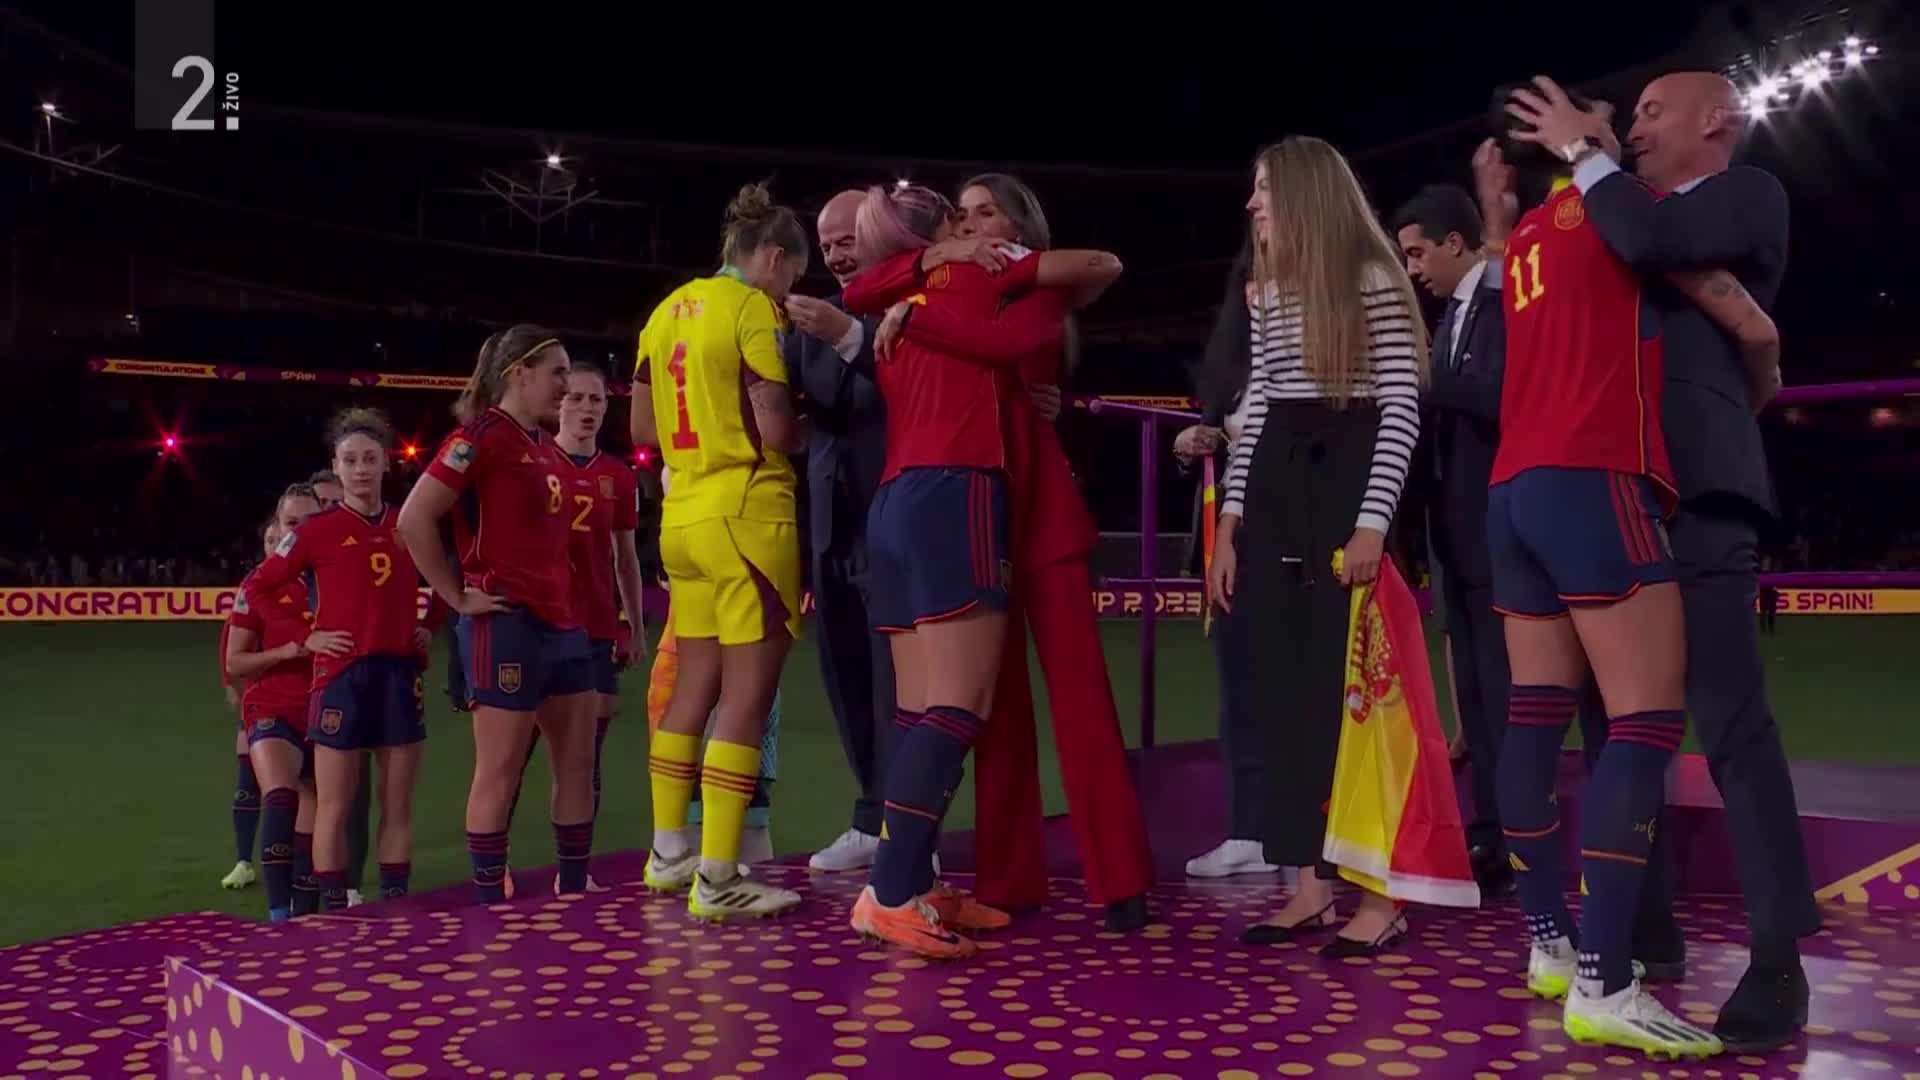 Sport Football is one Kiss. Видео поцелуя на футбольном матче на трибуне дама в Красном платье.